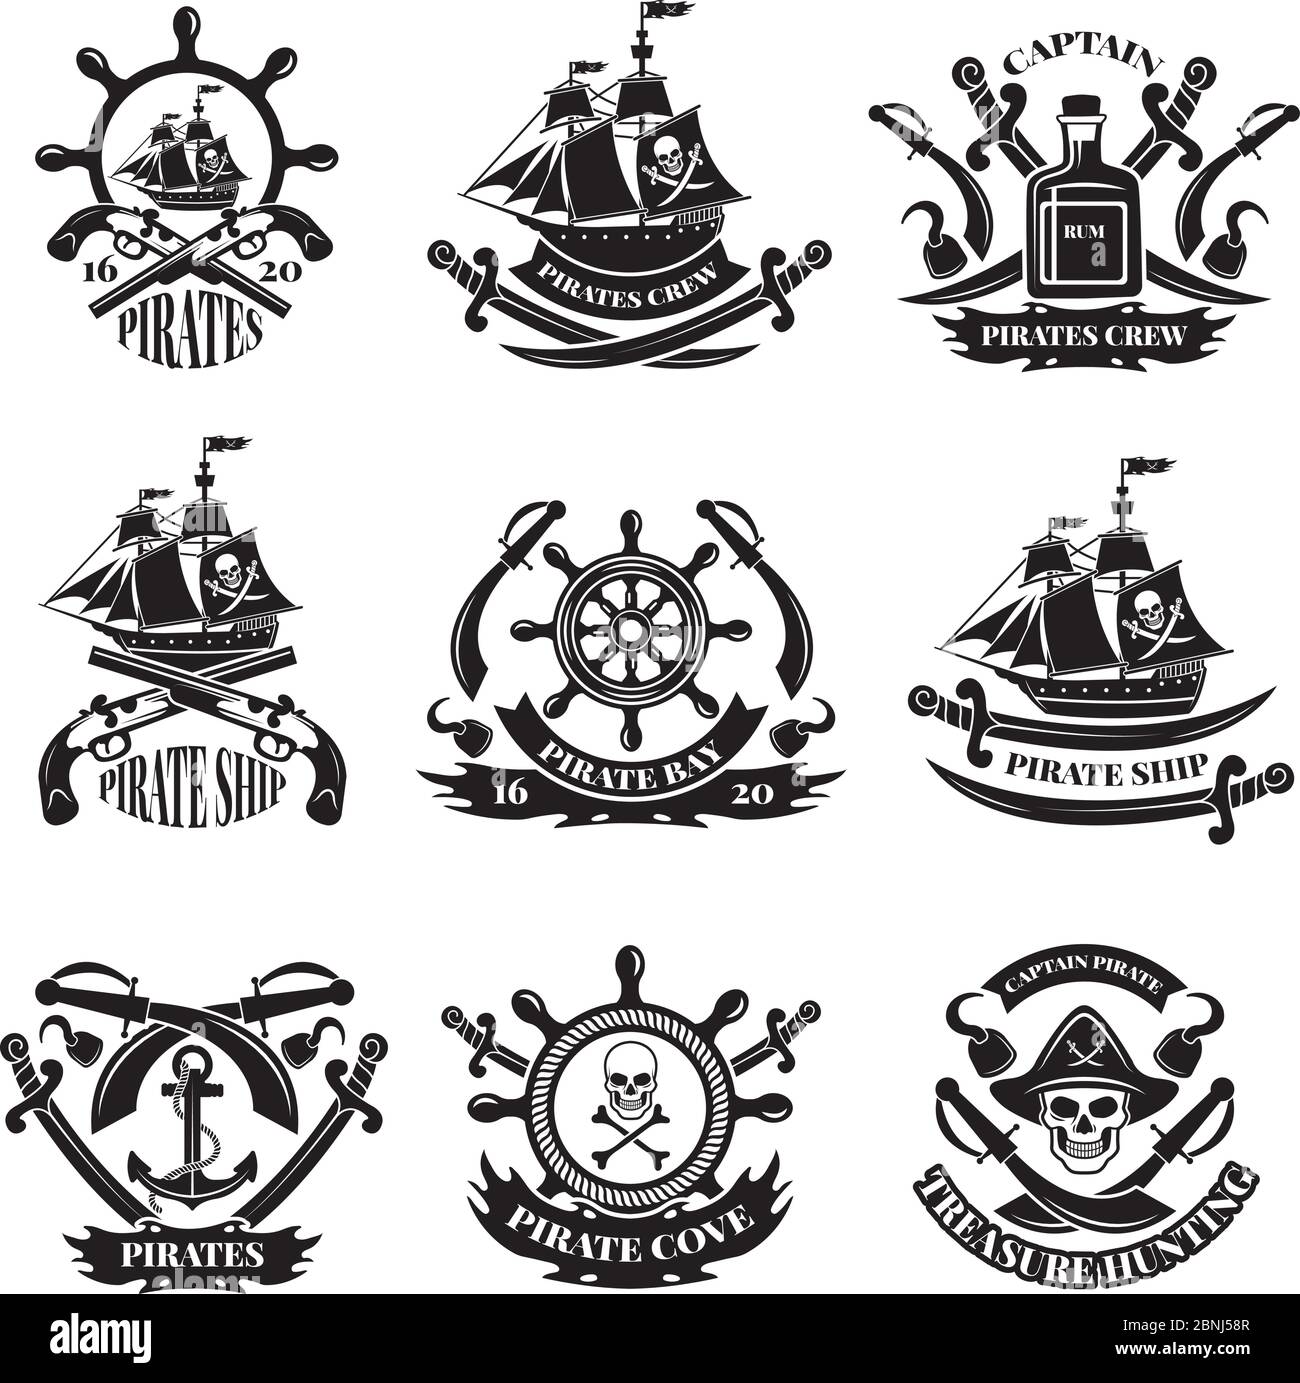 Pirate skull, corsair ships, symbols of piracy. Monochrome labels set Stock Vector